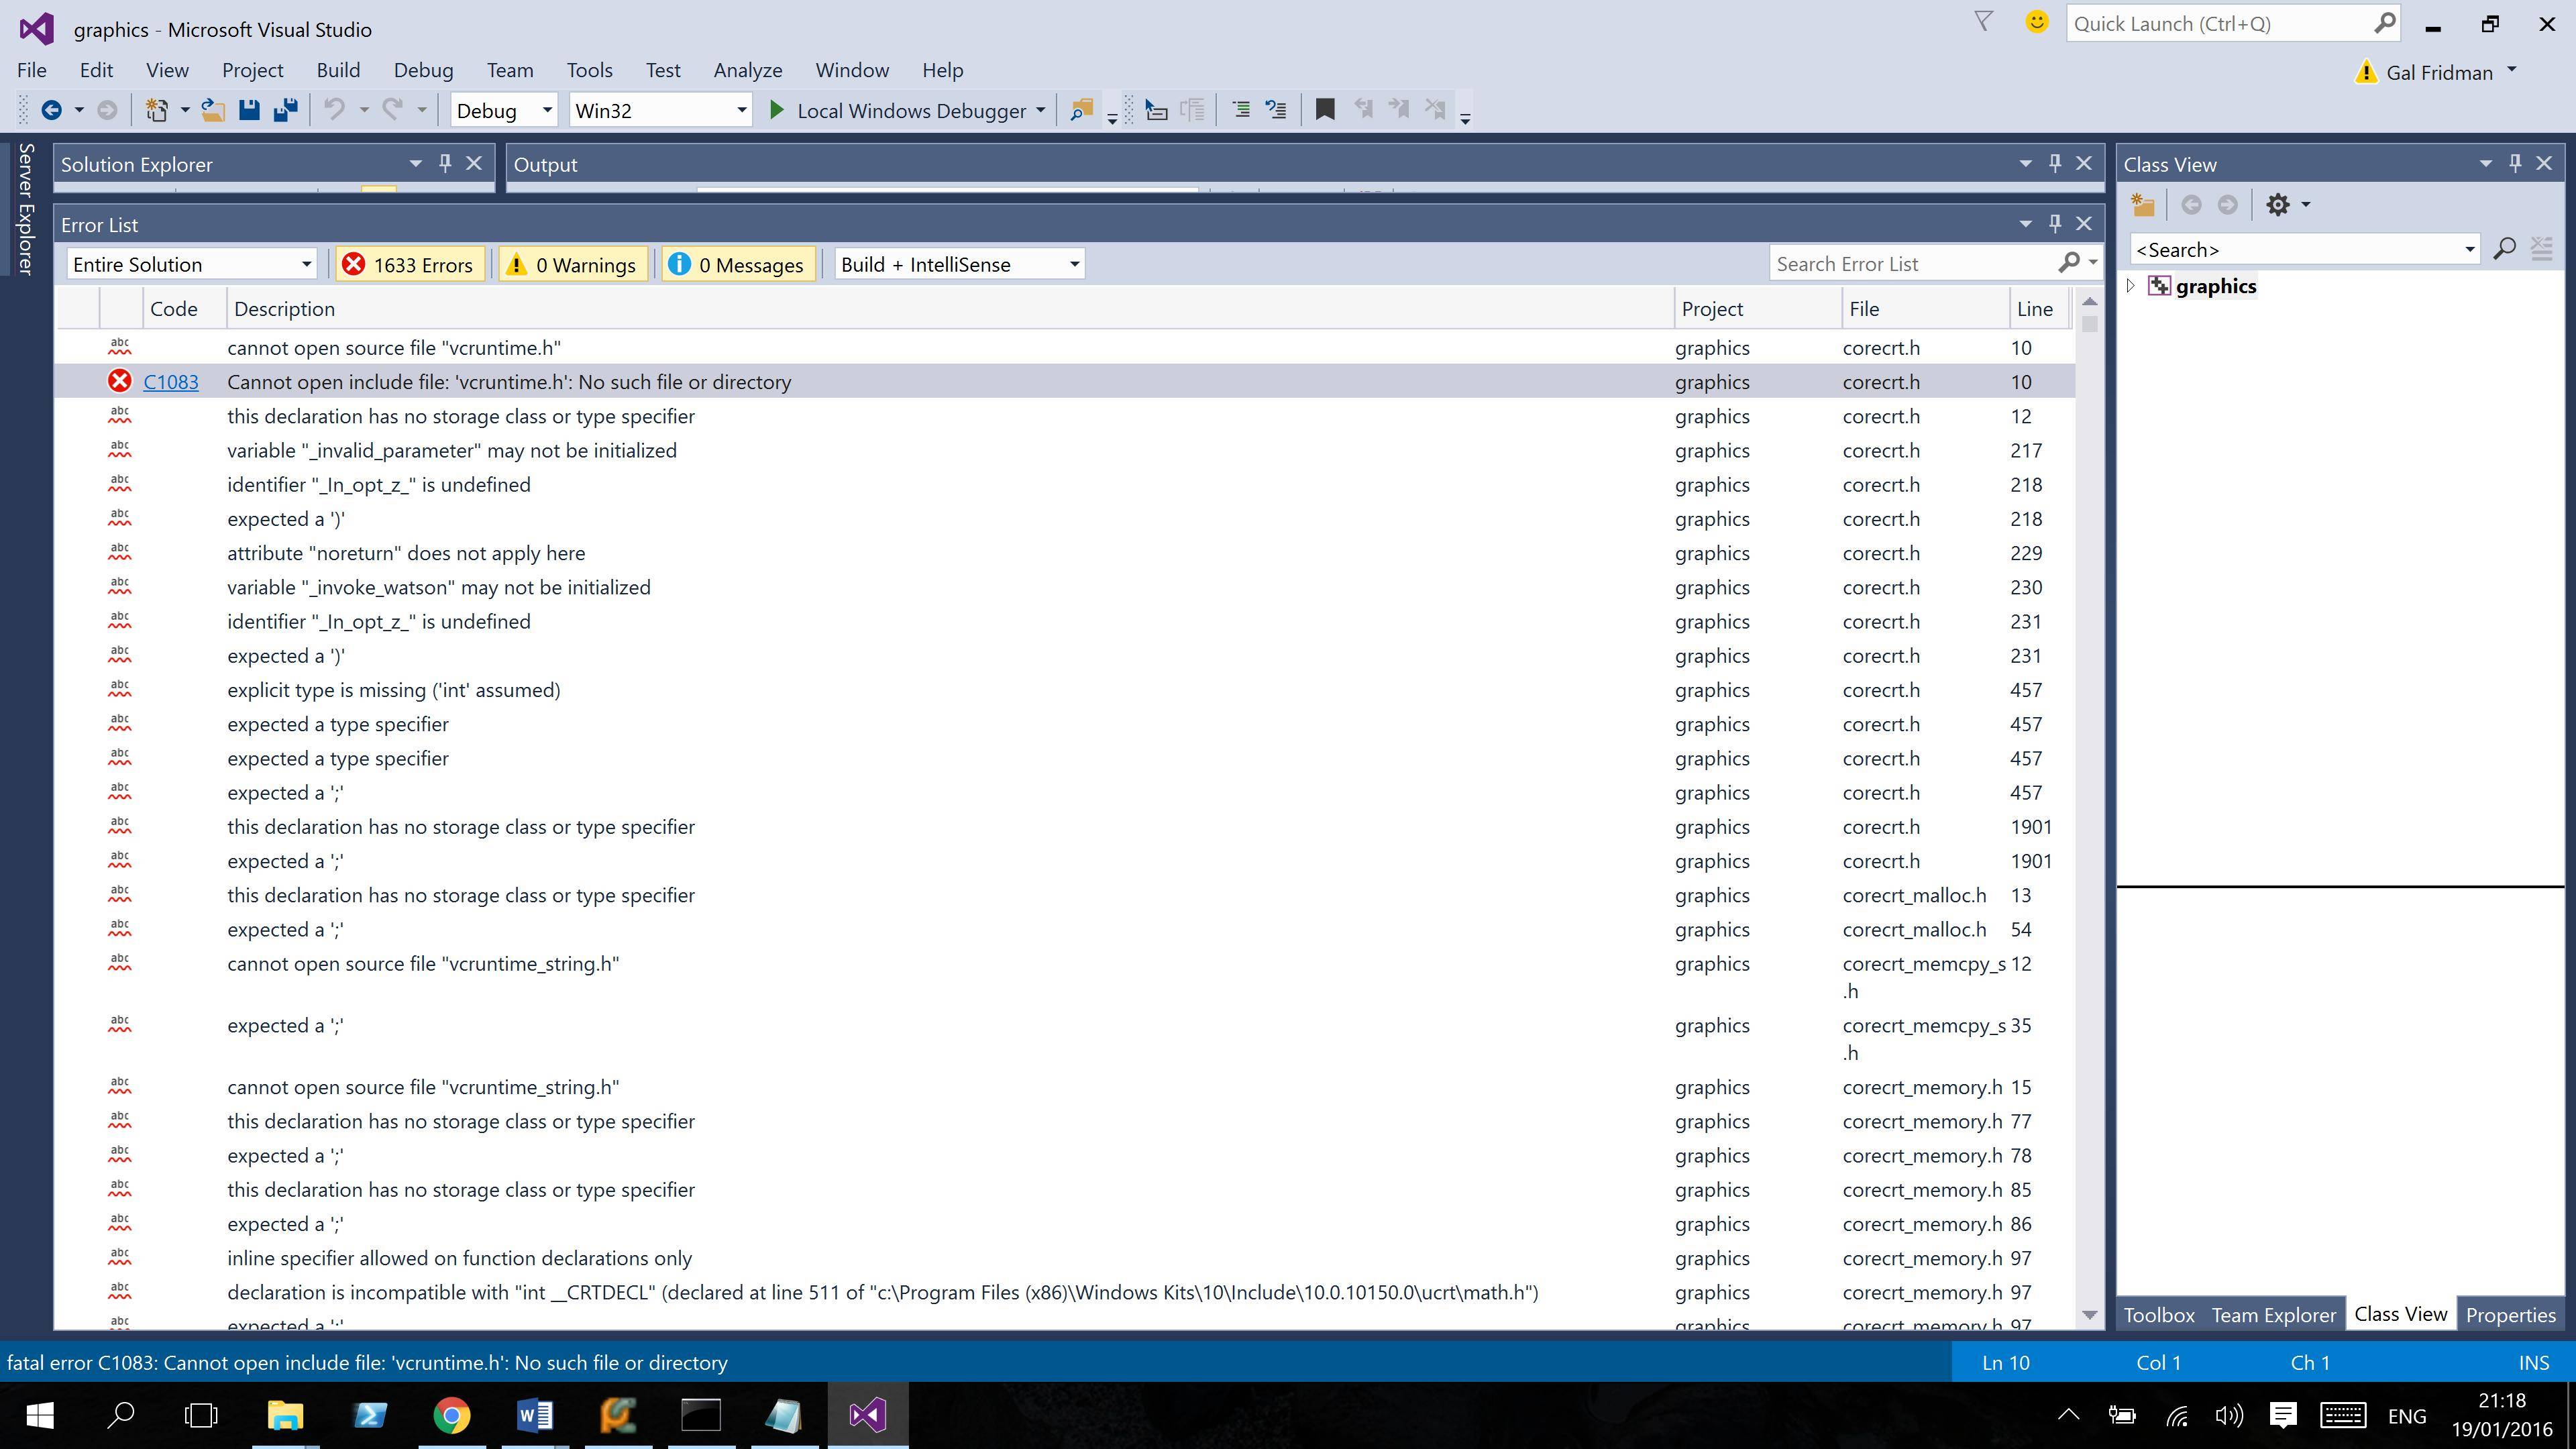 How to Install Microsoft Visual Studio 2010 in Windows 10